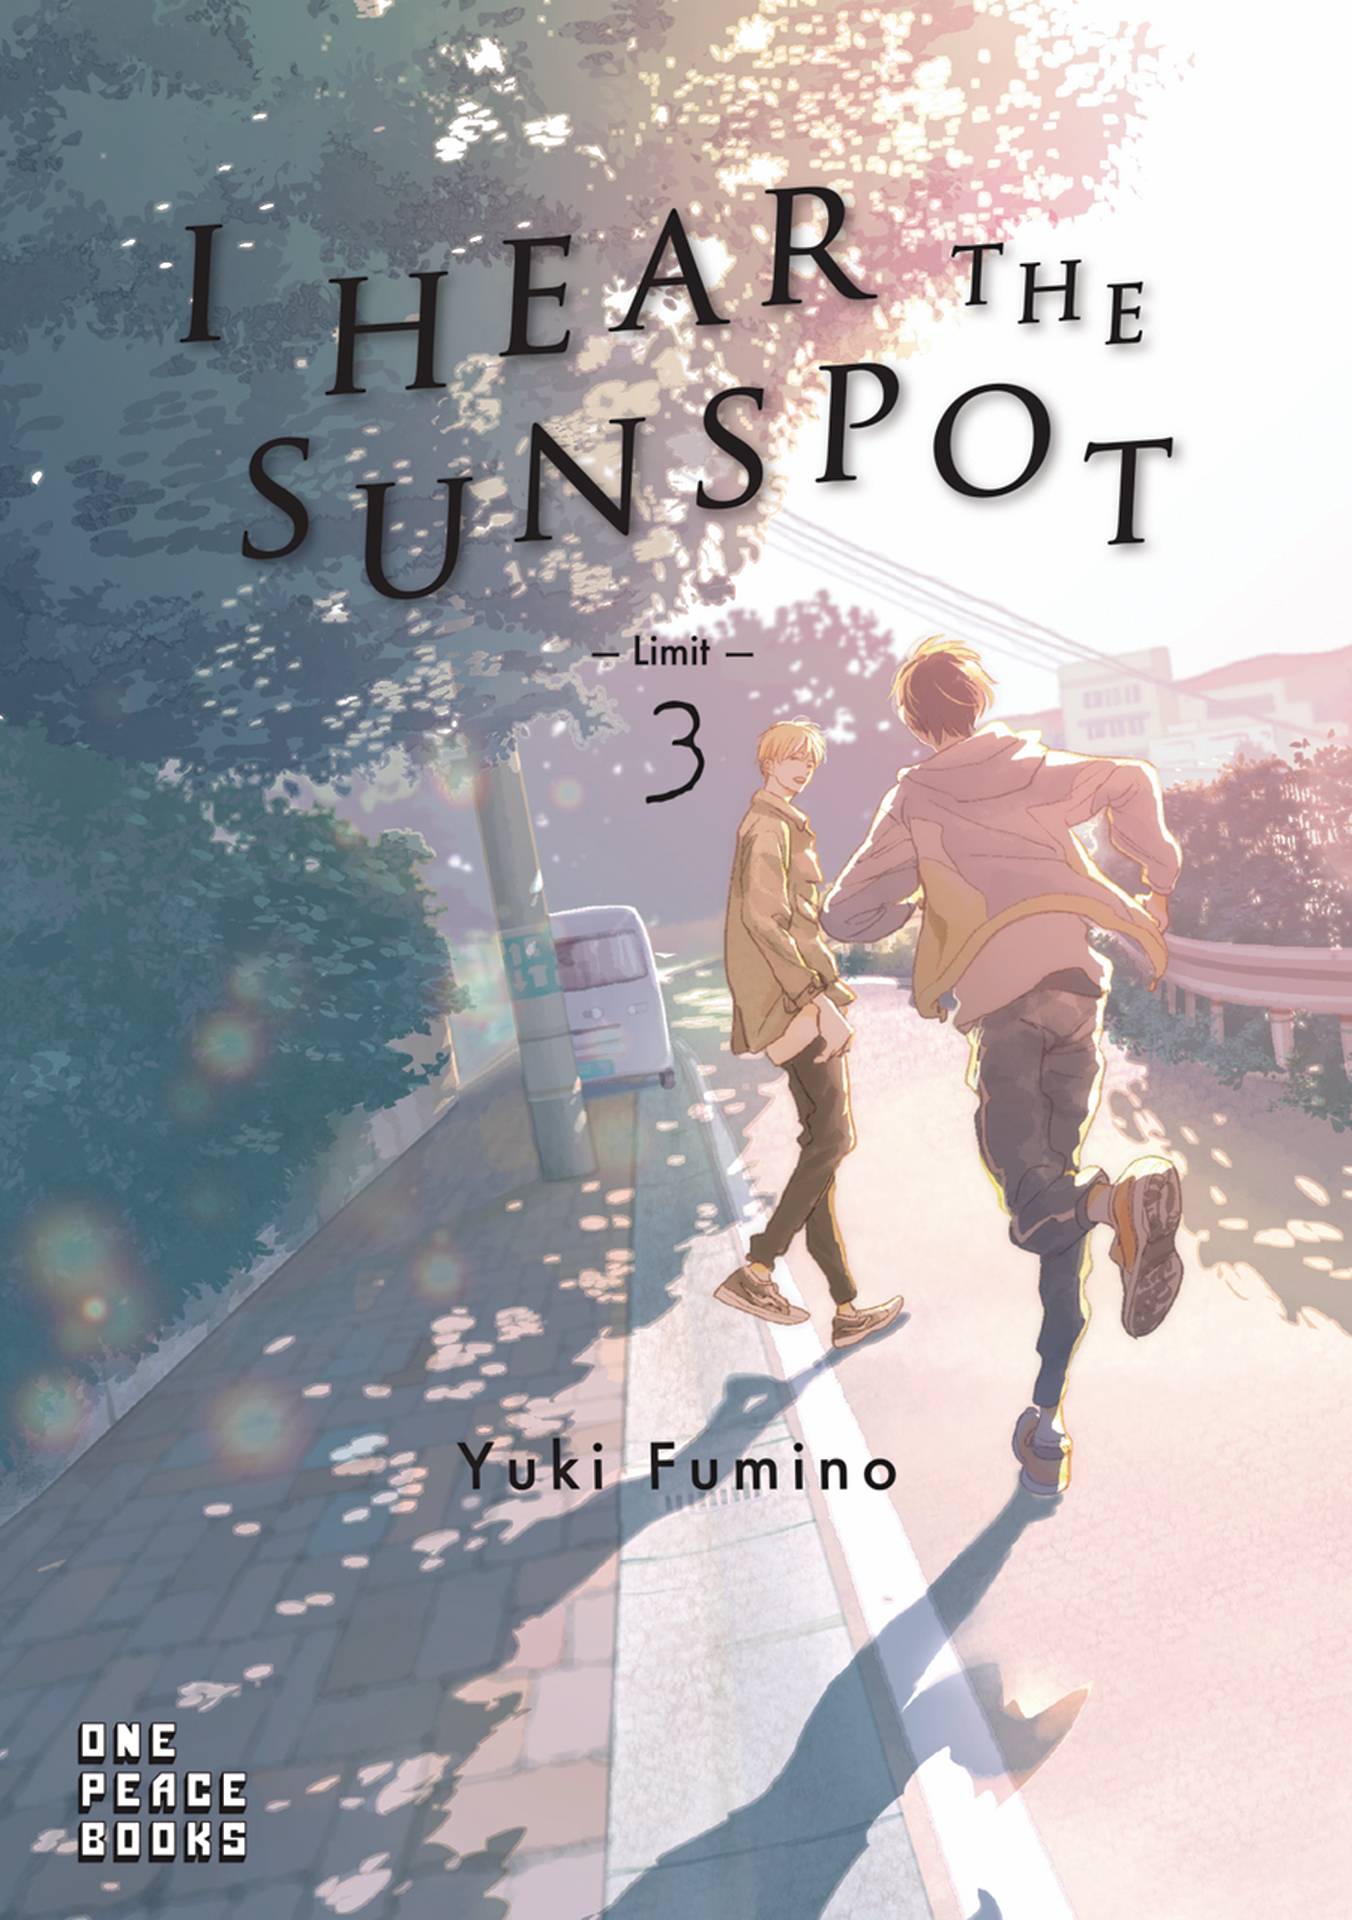 I Hear The Sunspot vol 5: Limit Part 3